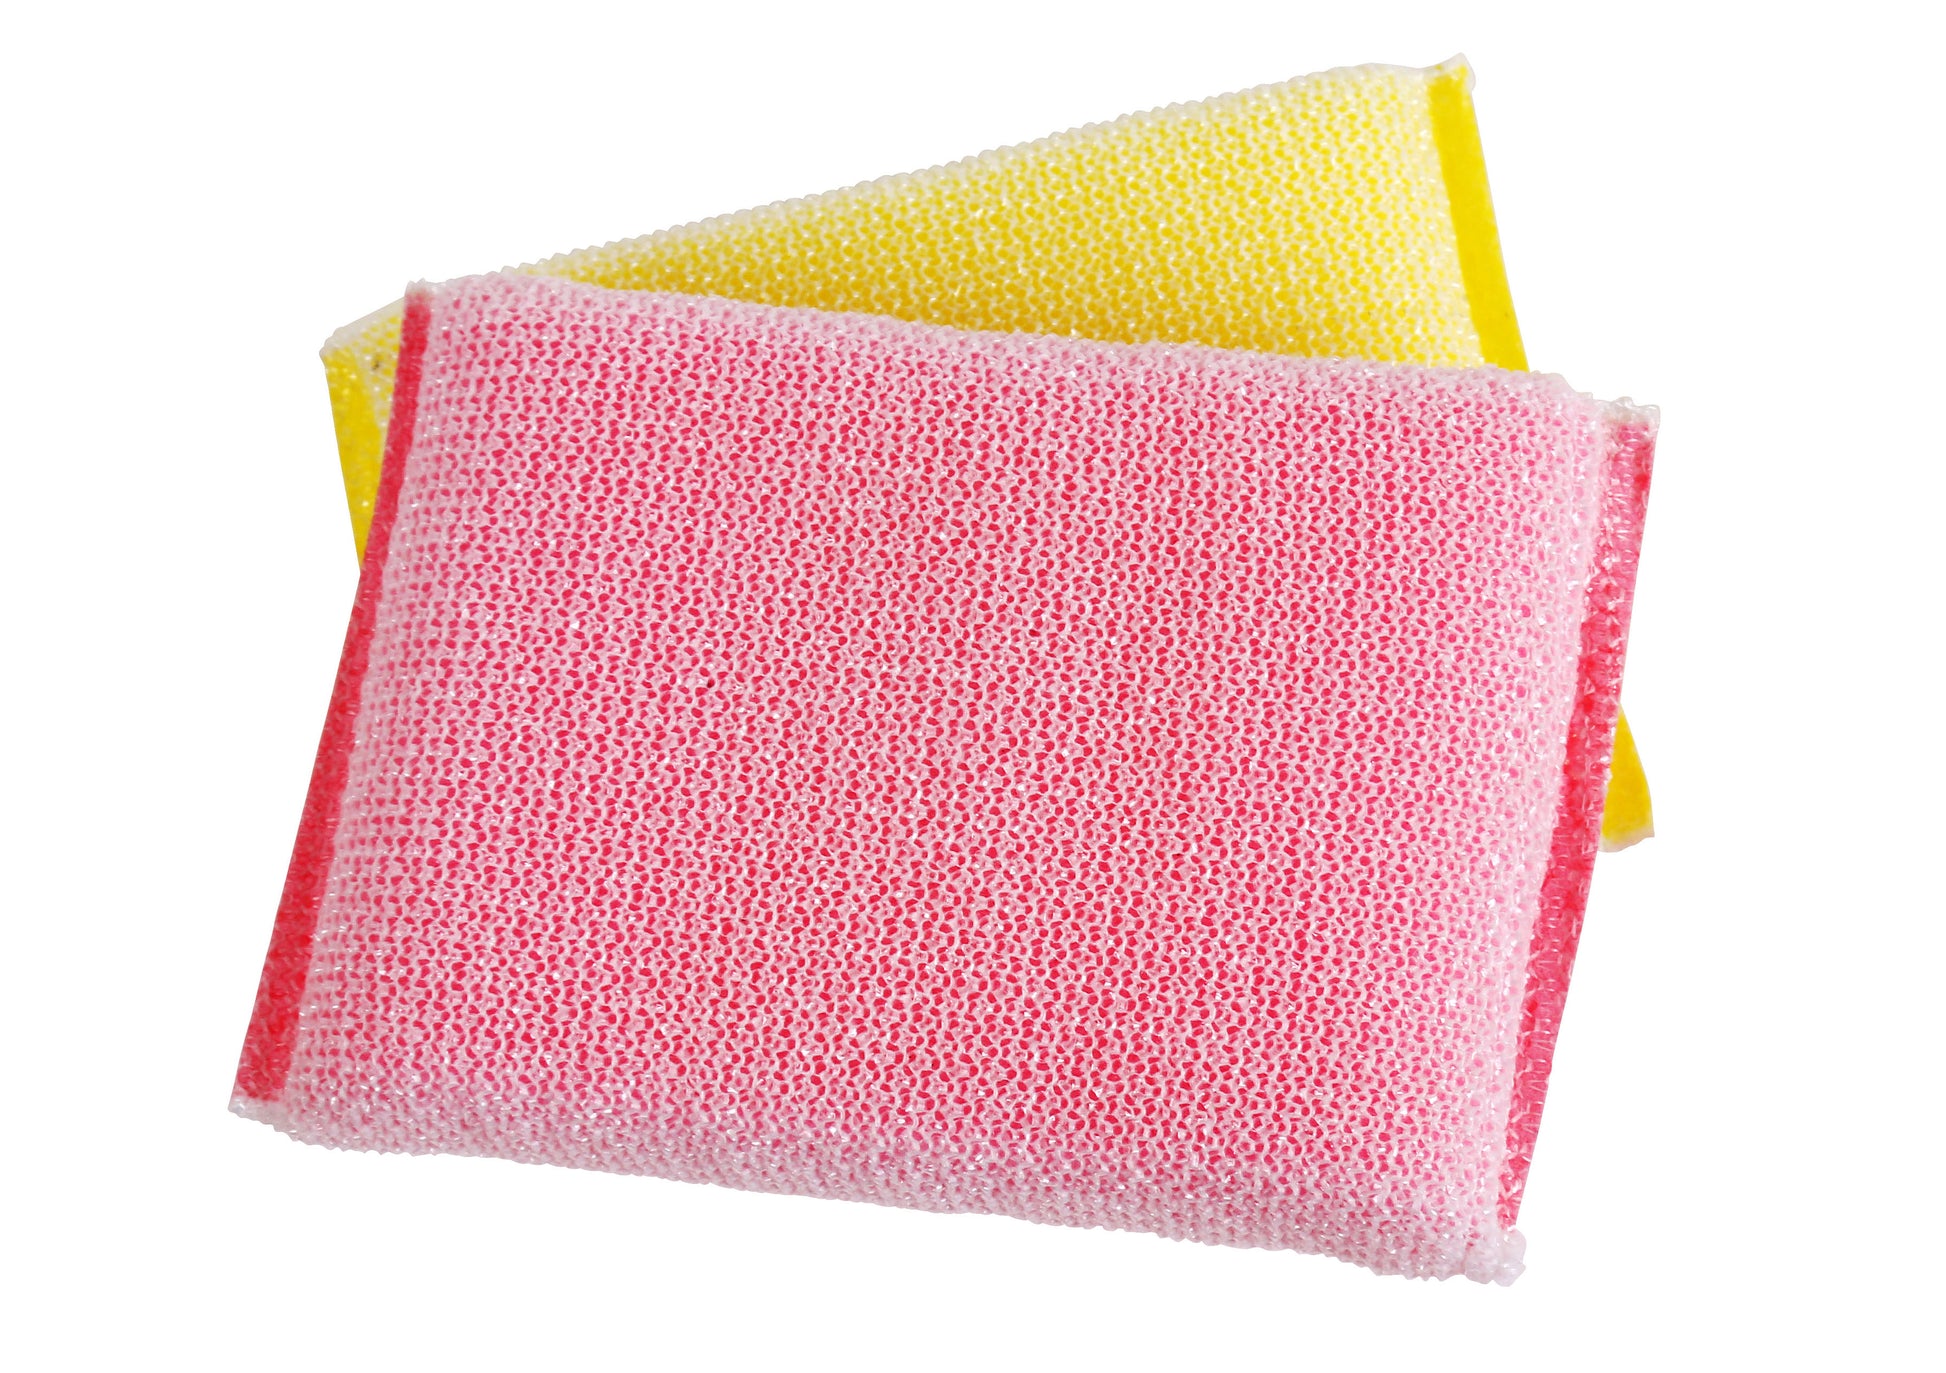 Heavy Duty Cellulose Scrub Sponge, Large (1-pack.)